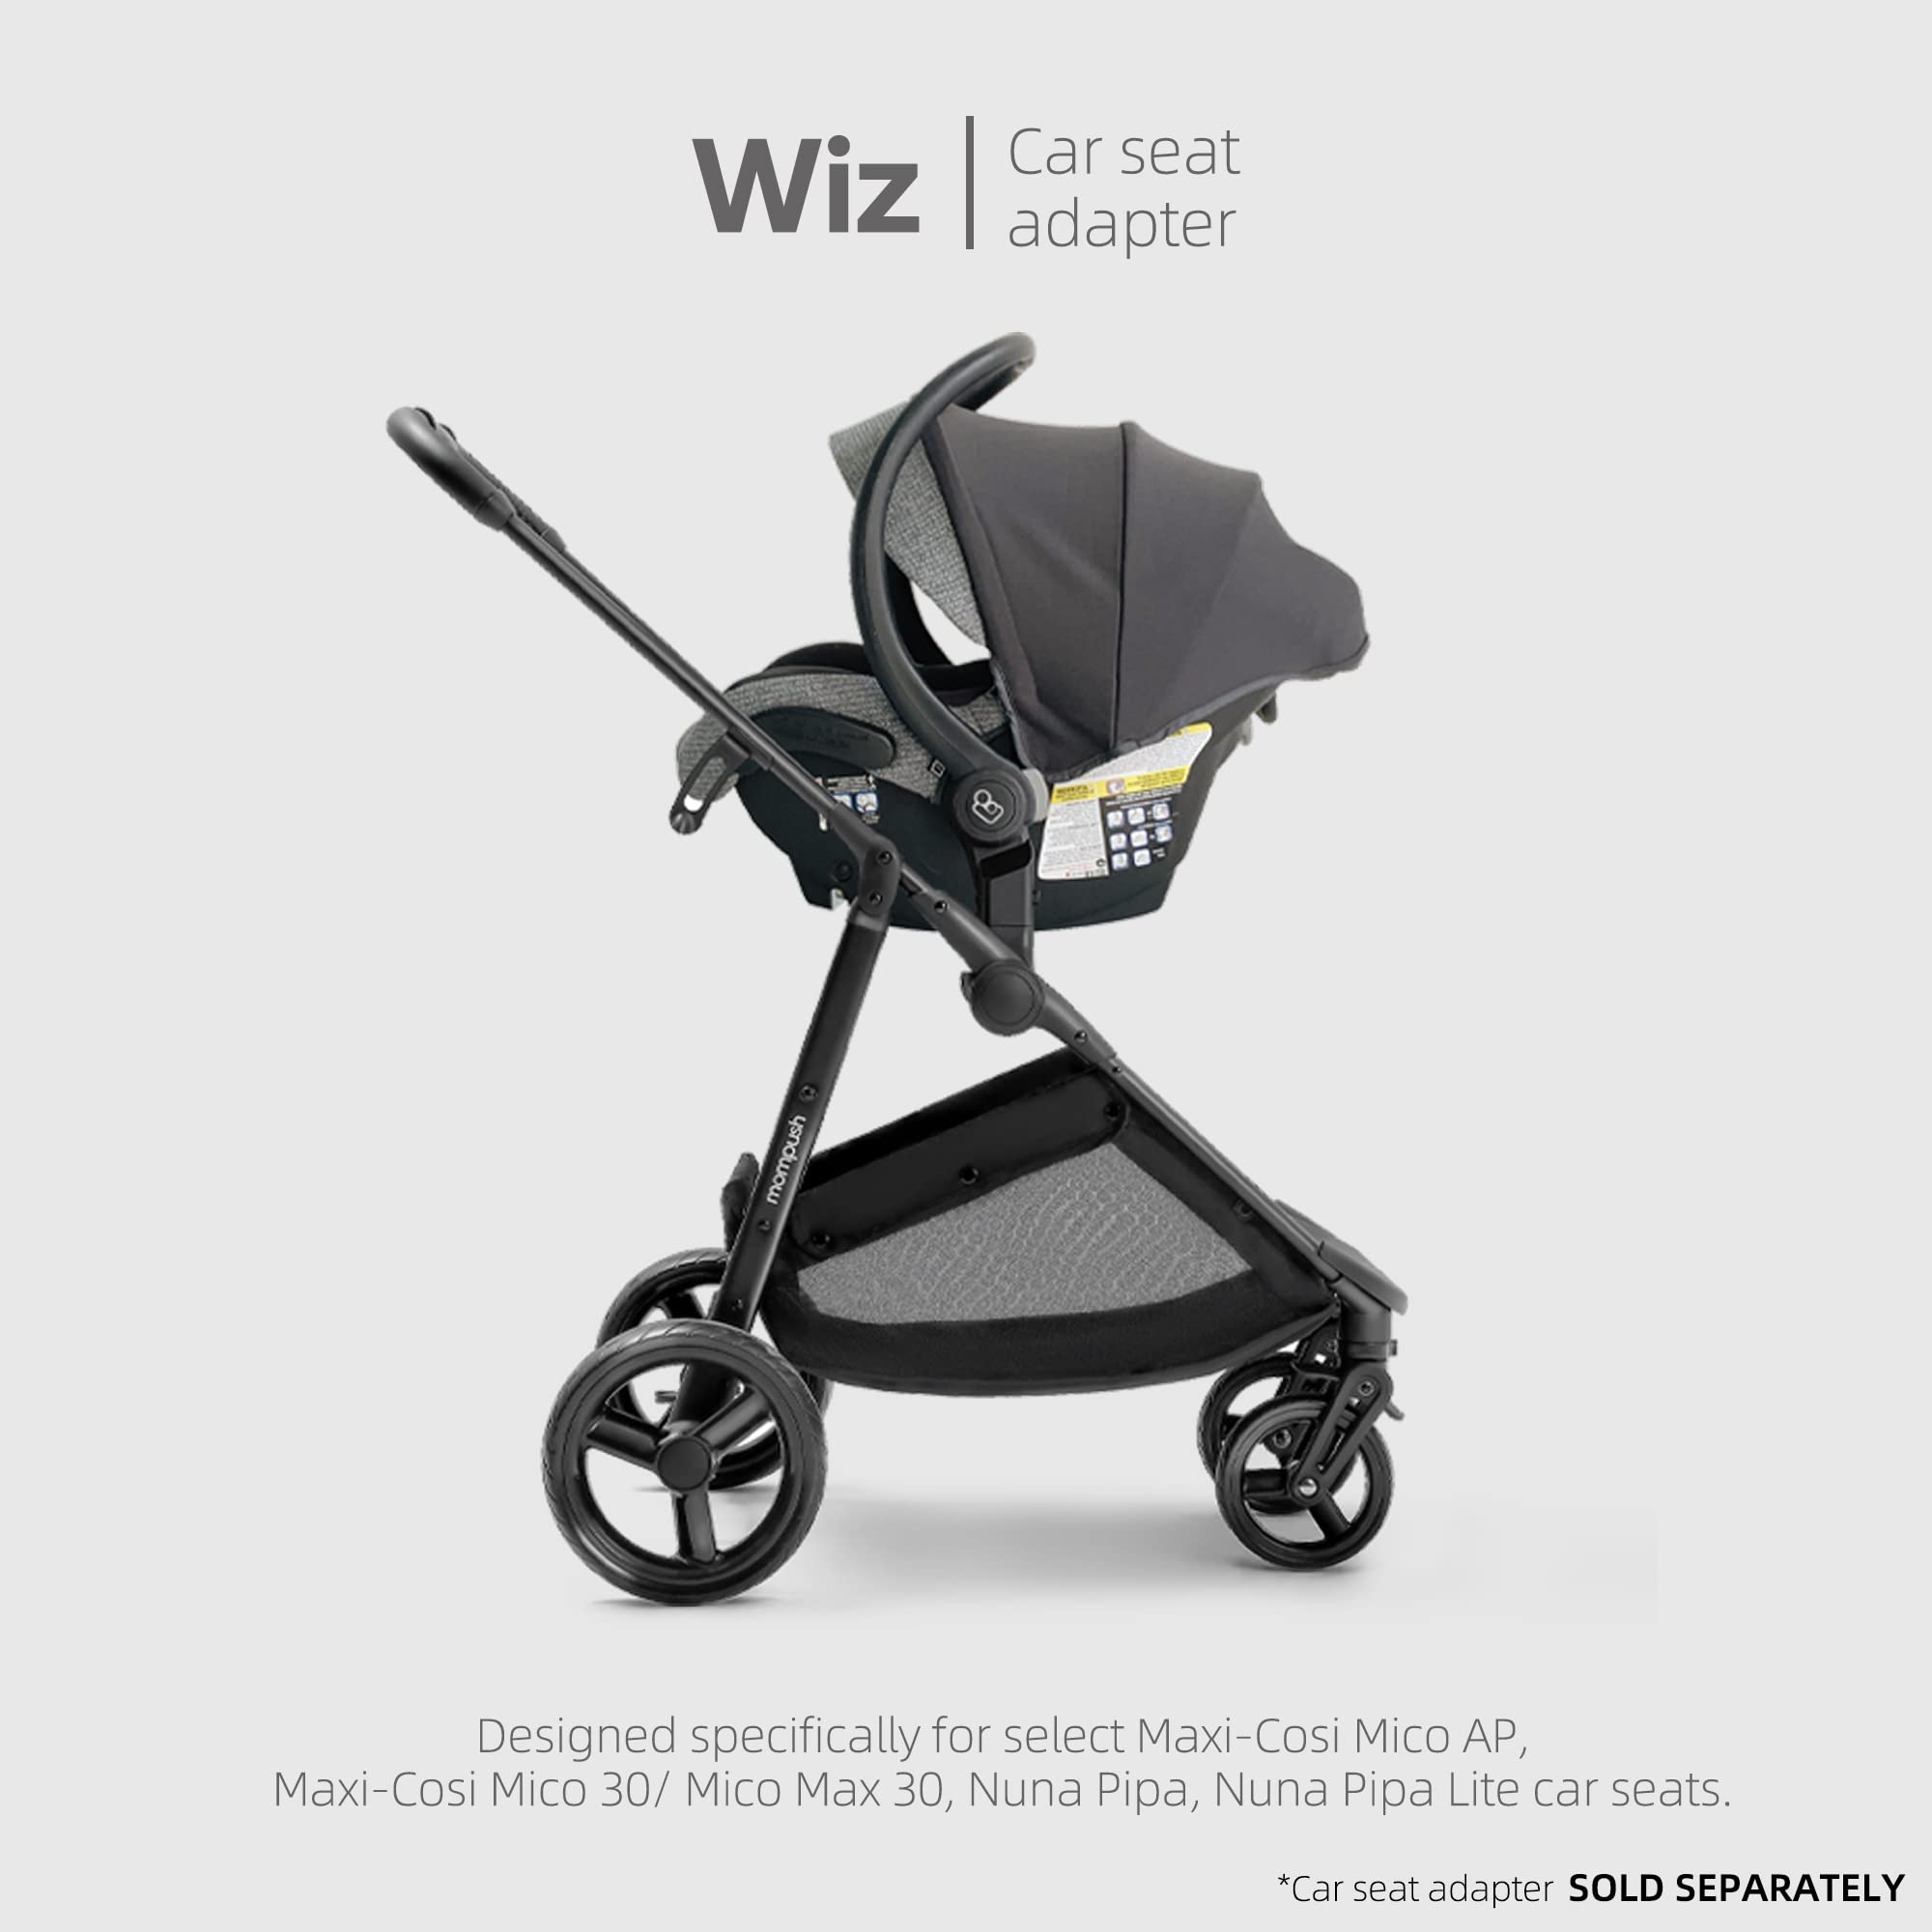 Mompush Wiz Car Seat Adapter Fits Maxi-COSI and Nuna Car Seat